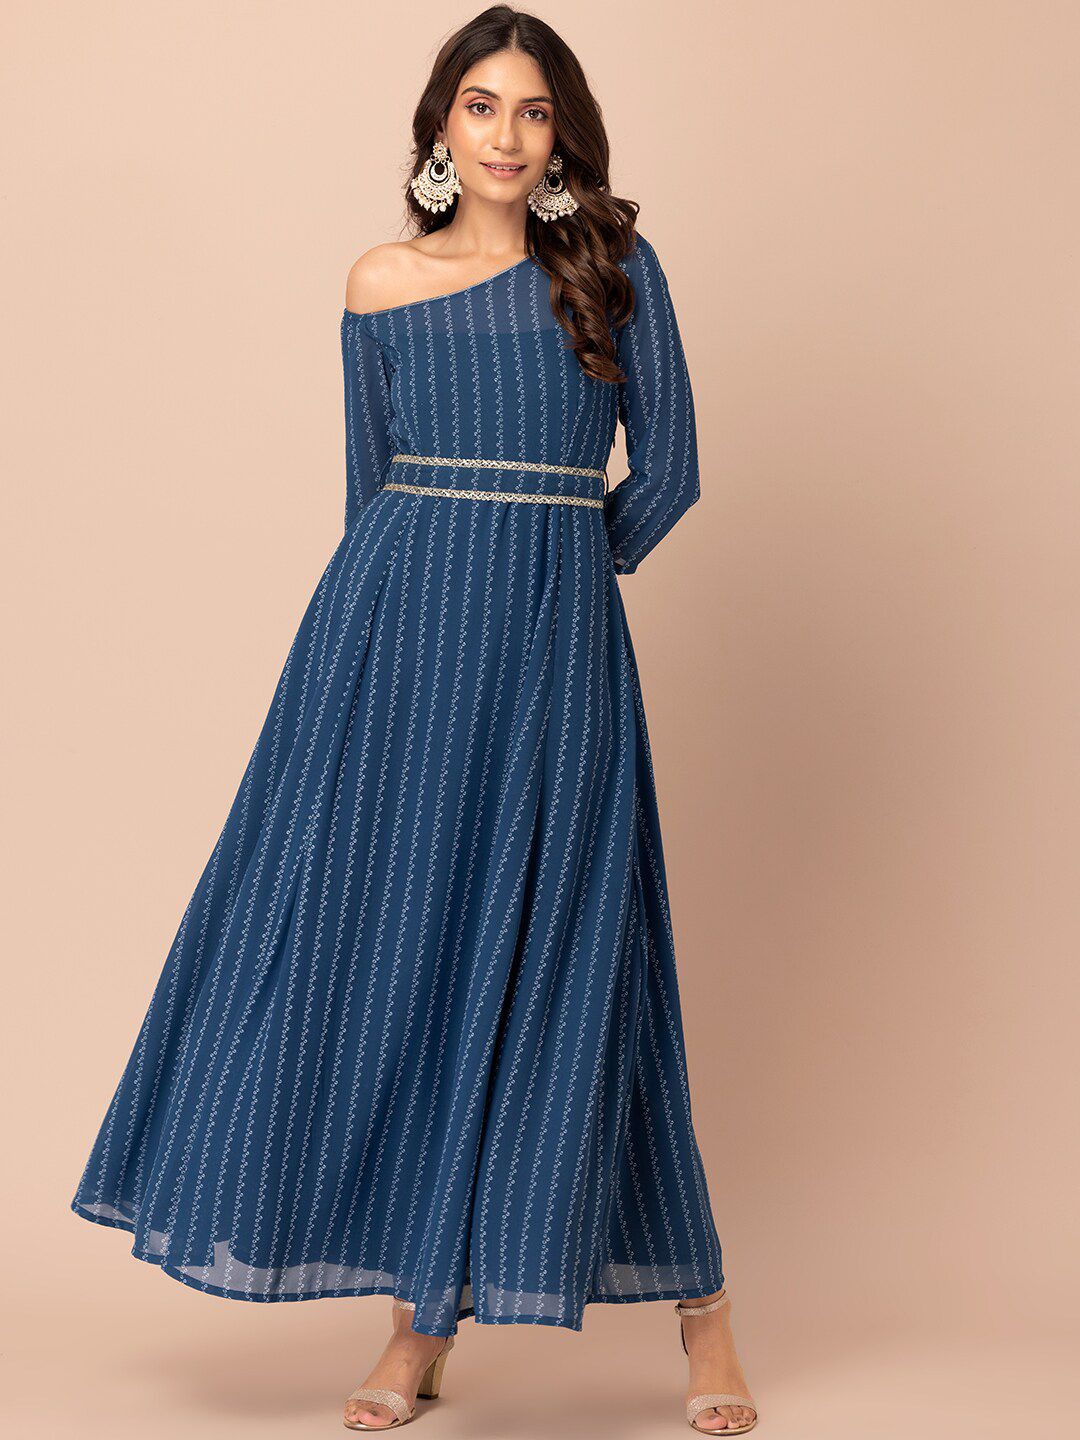 INDYA Blue Ethnic Motifs Maxi Dress Price in India